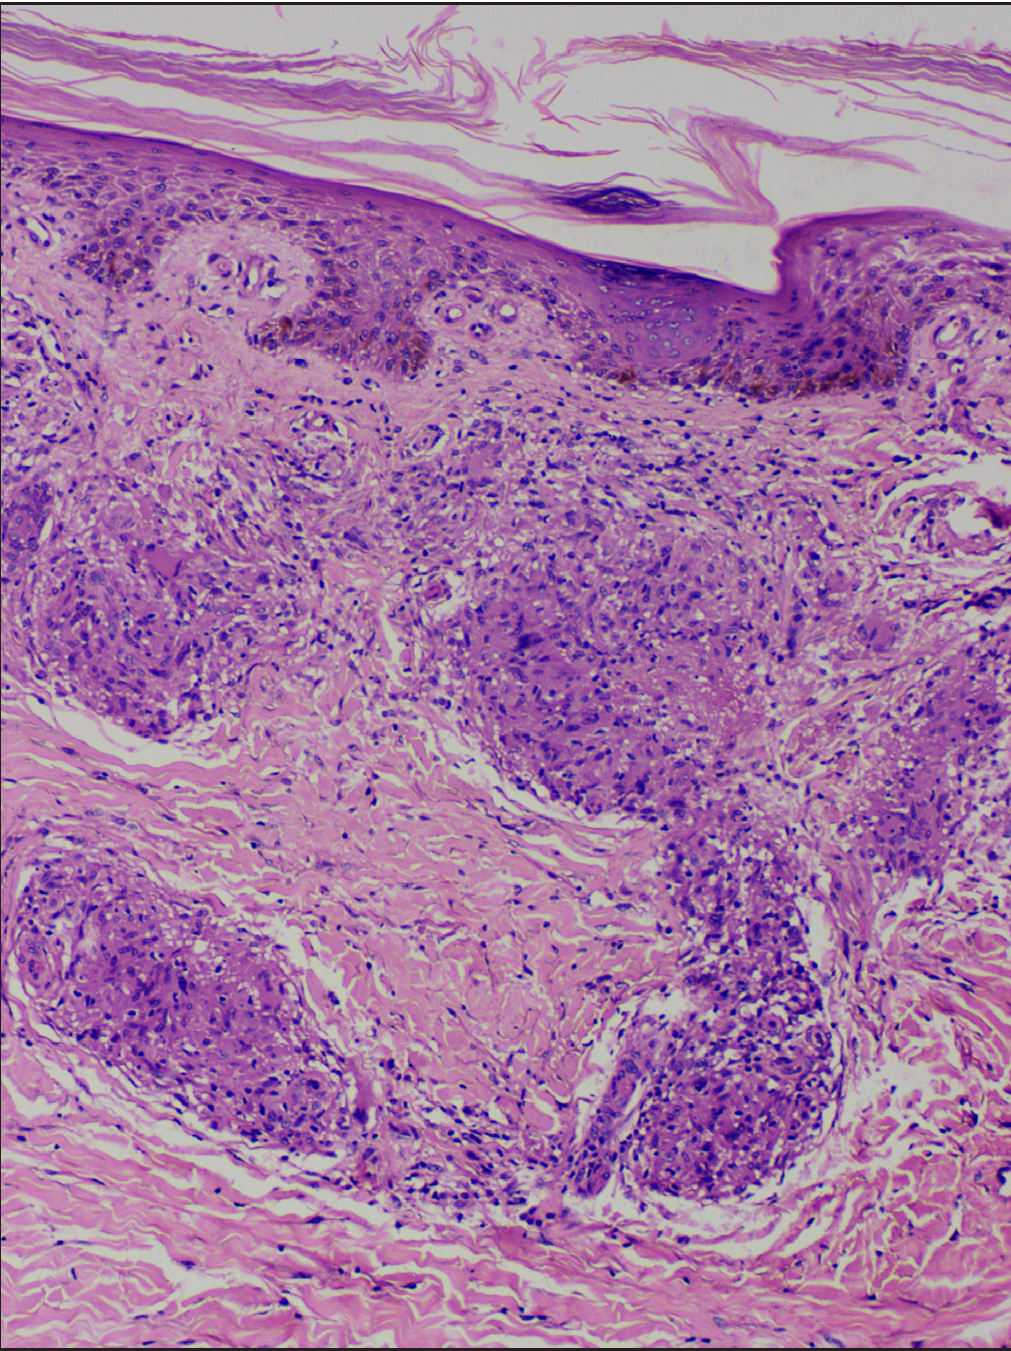 Naked sarcoid granulomas without any lymphocyte cuffing (Haematoxylin & Eosin, 100x)